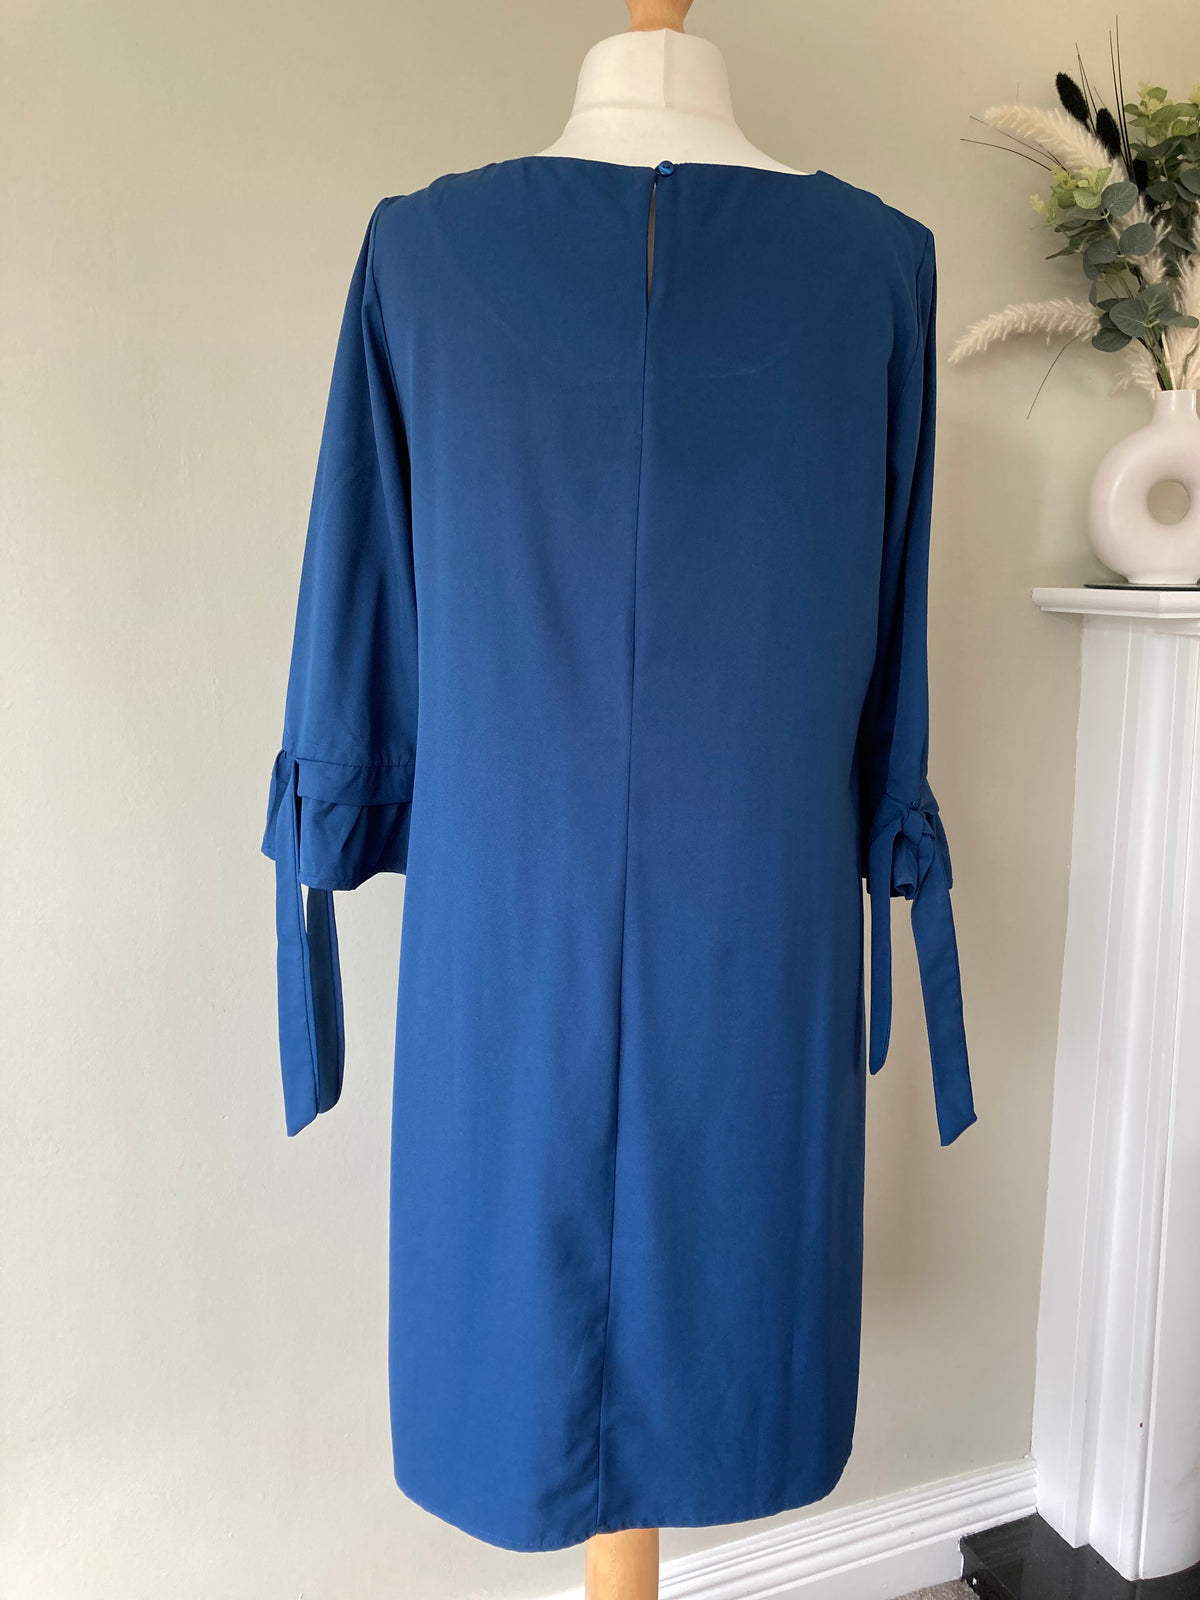 Blue longline dress by BODYFLIRT - Size 18